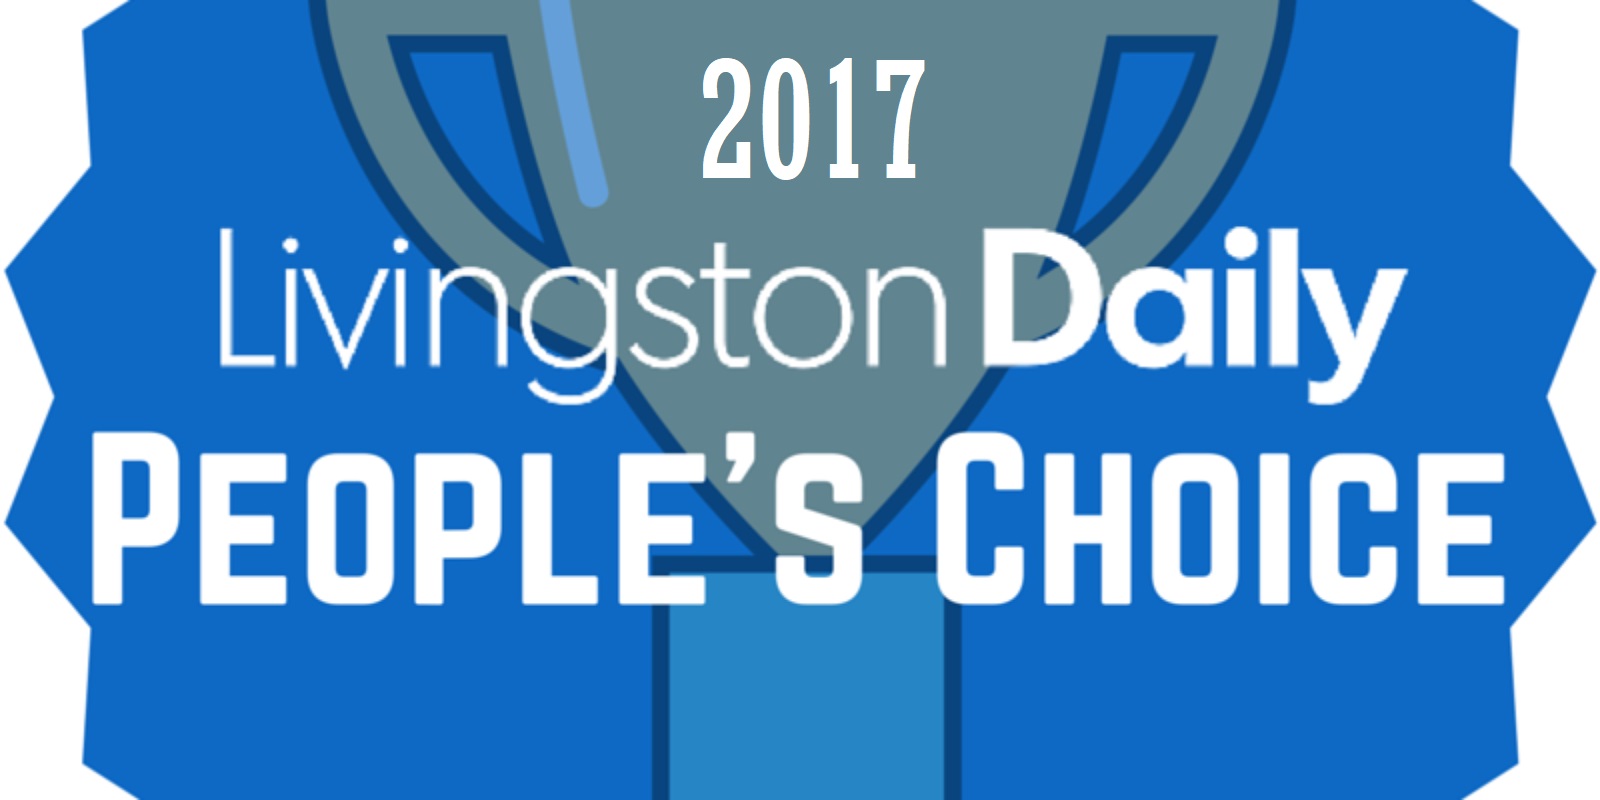 Livingston County 2017 Peoples choice.jpg